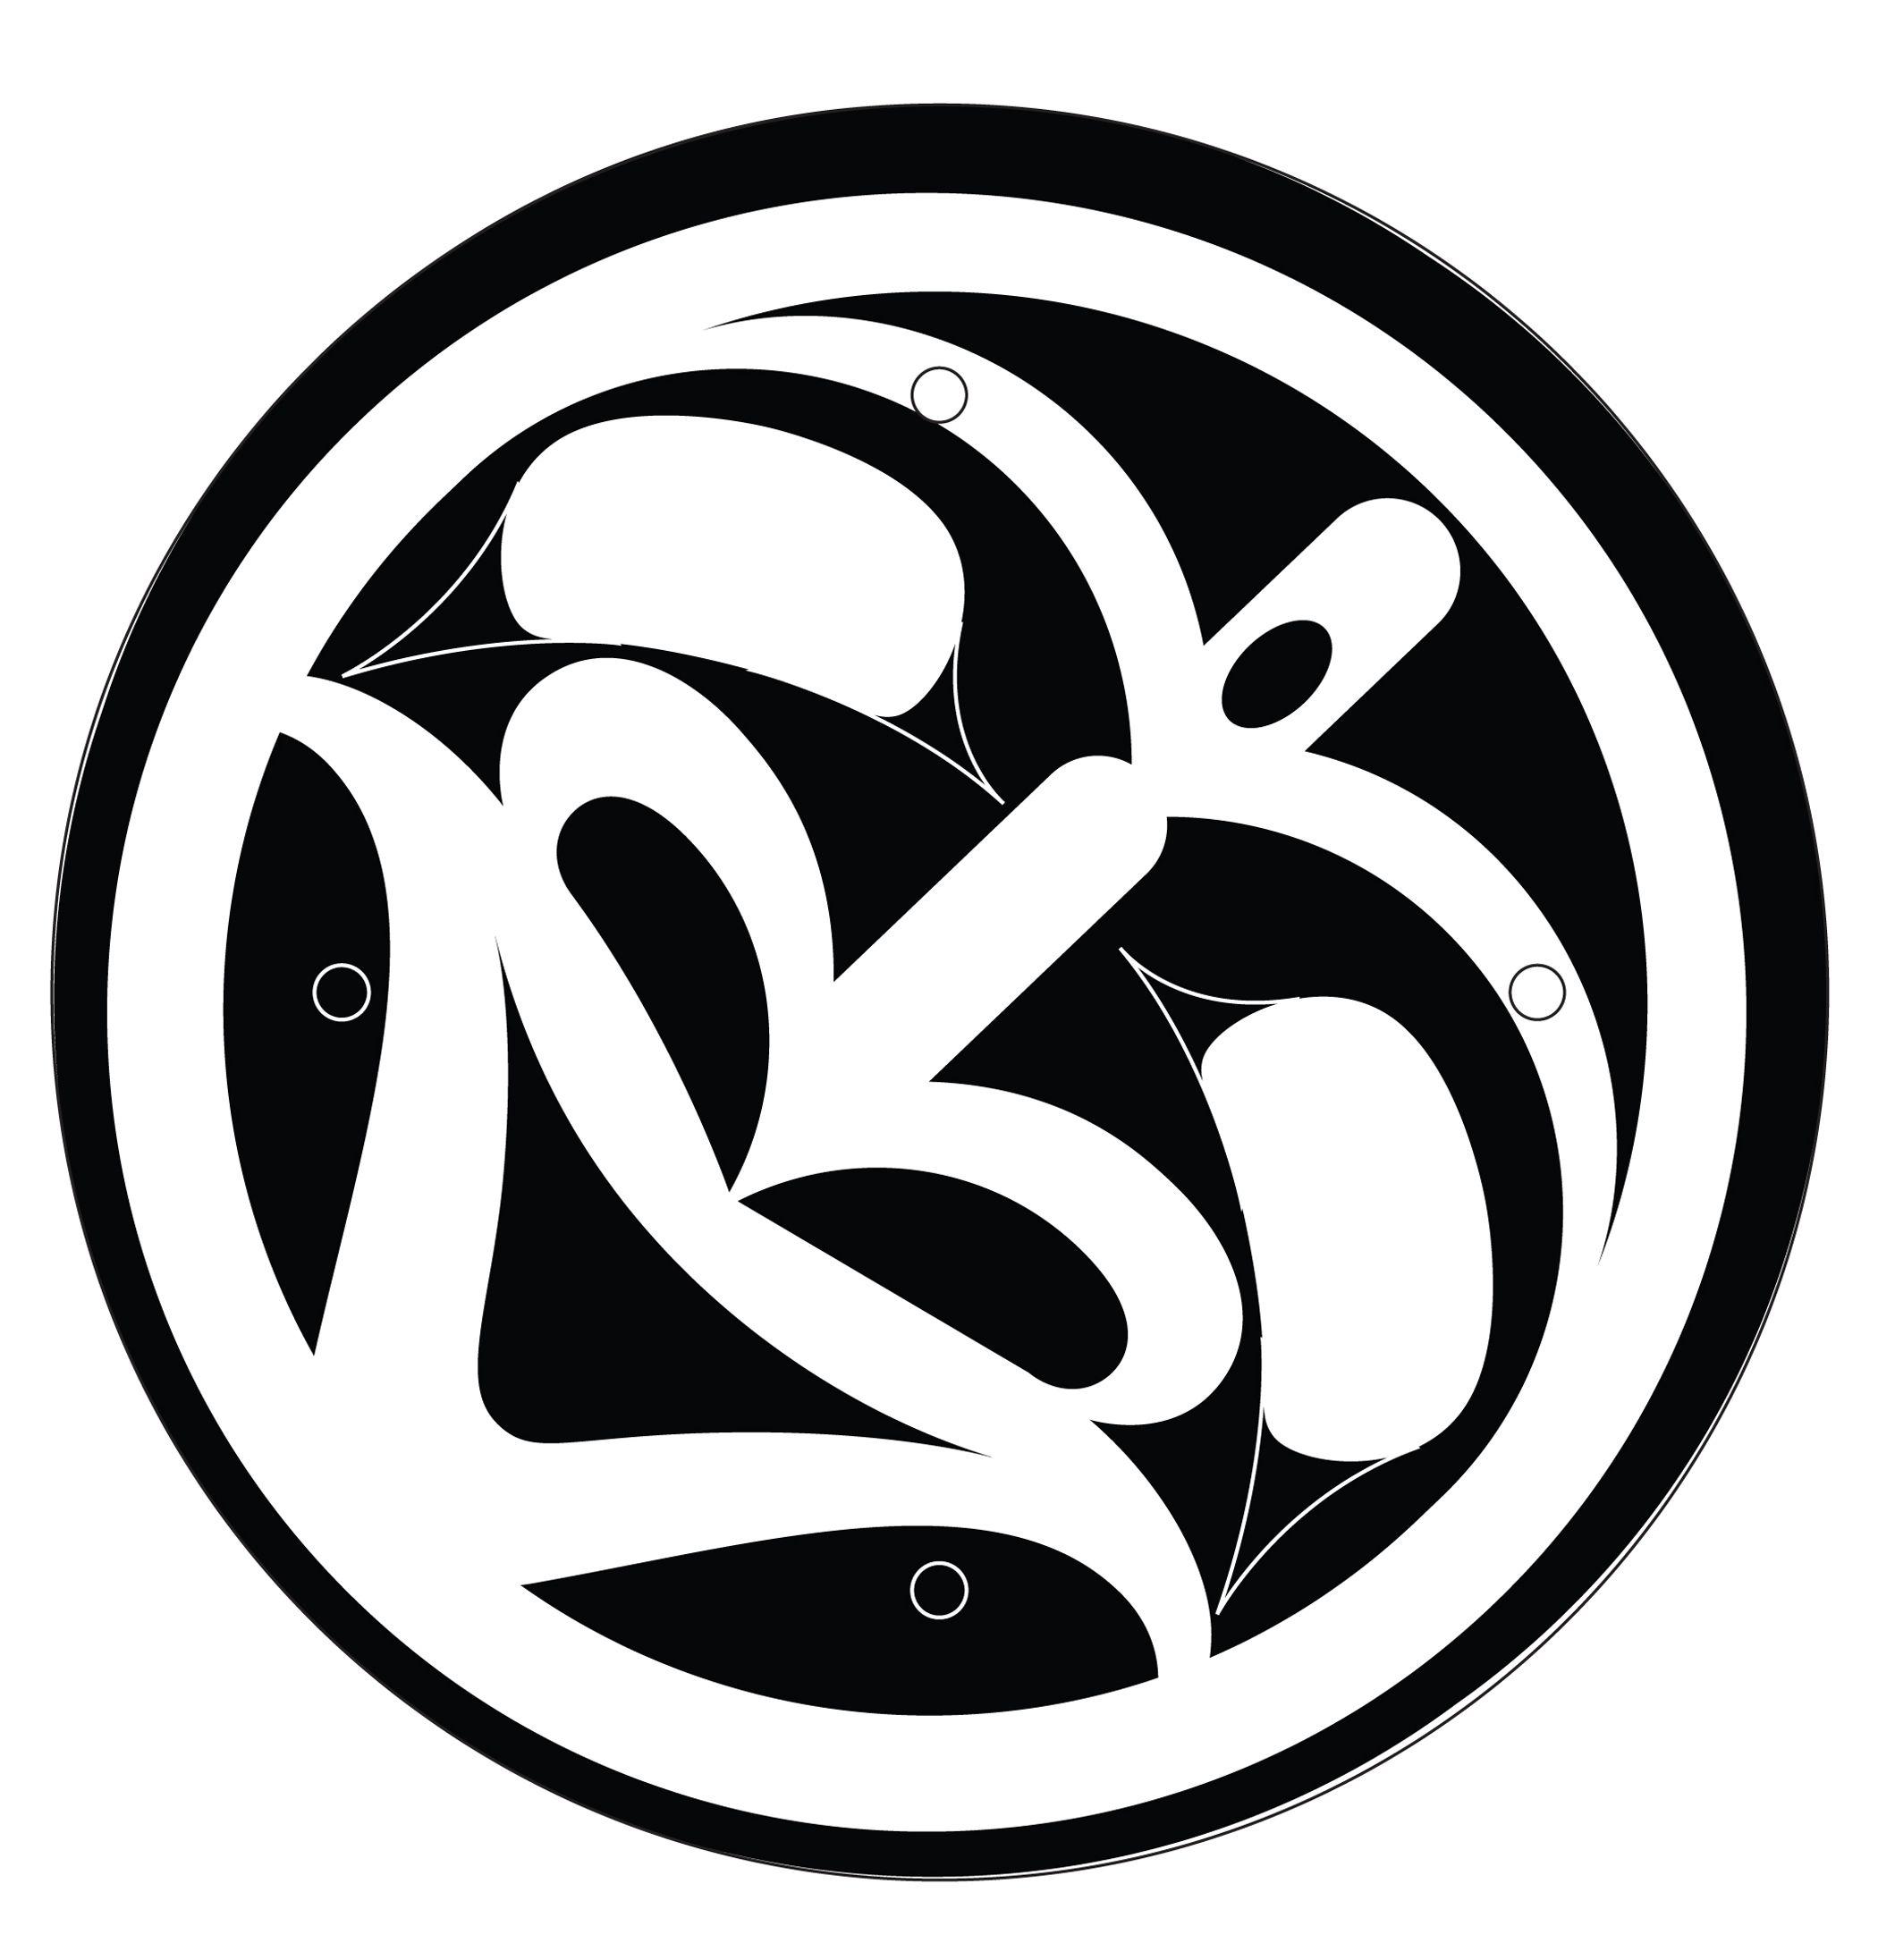 Manhole Logo - The Artists & Art of the 2013 Ironclad Art Manhole Design Challenge